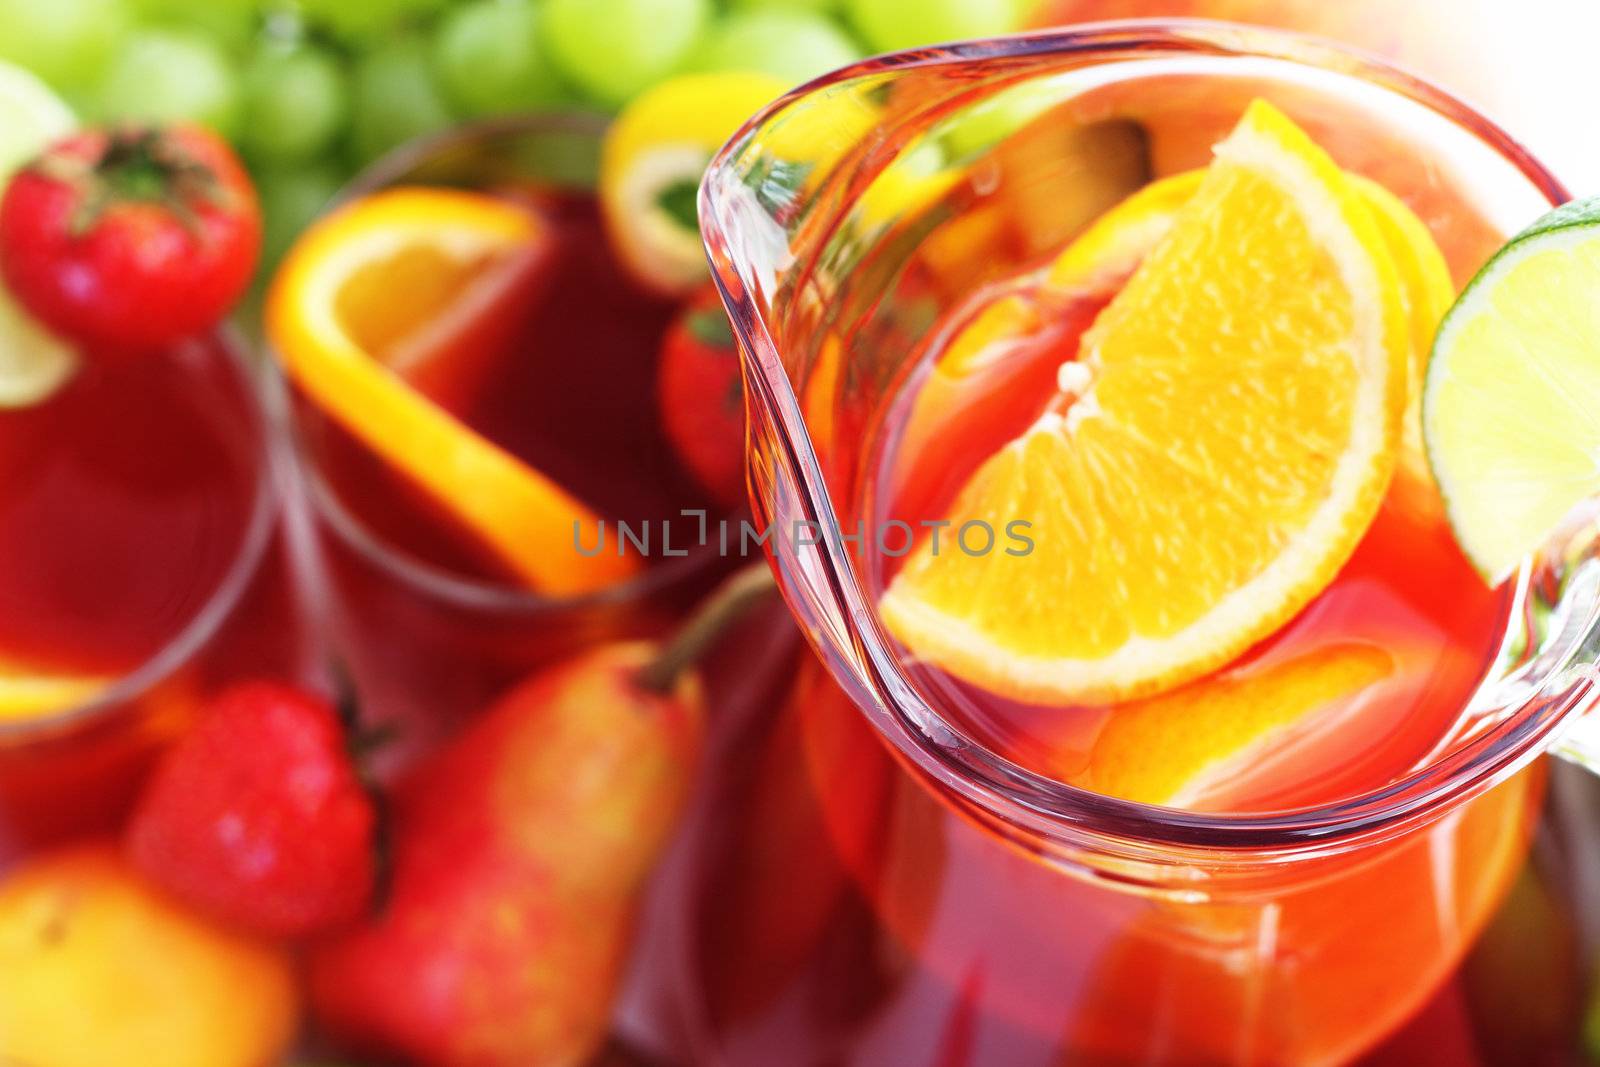 Refreshment beverage in pitcher with fruits  by destillat